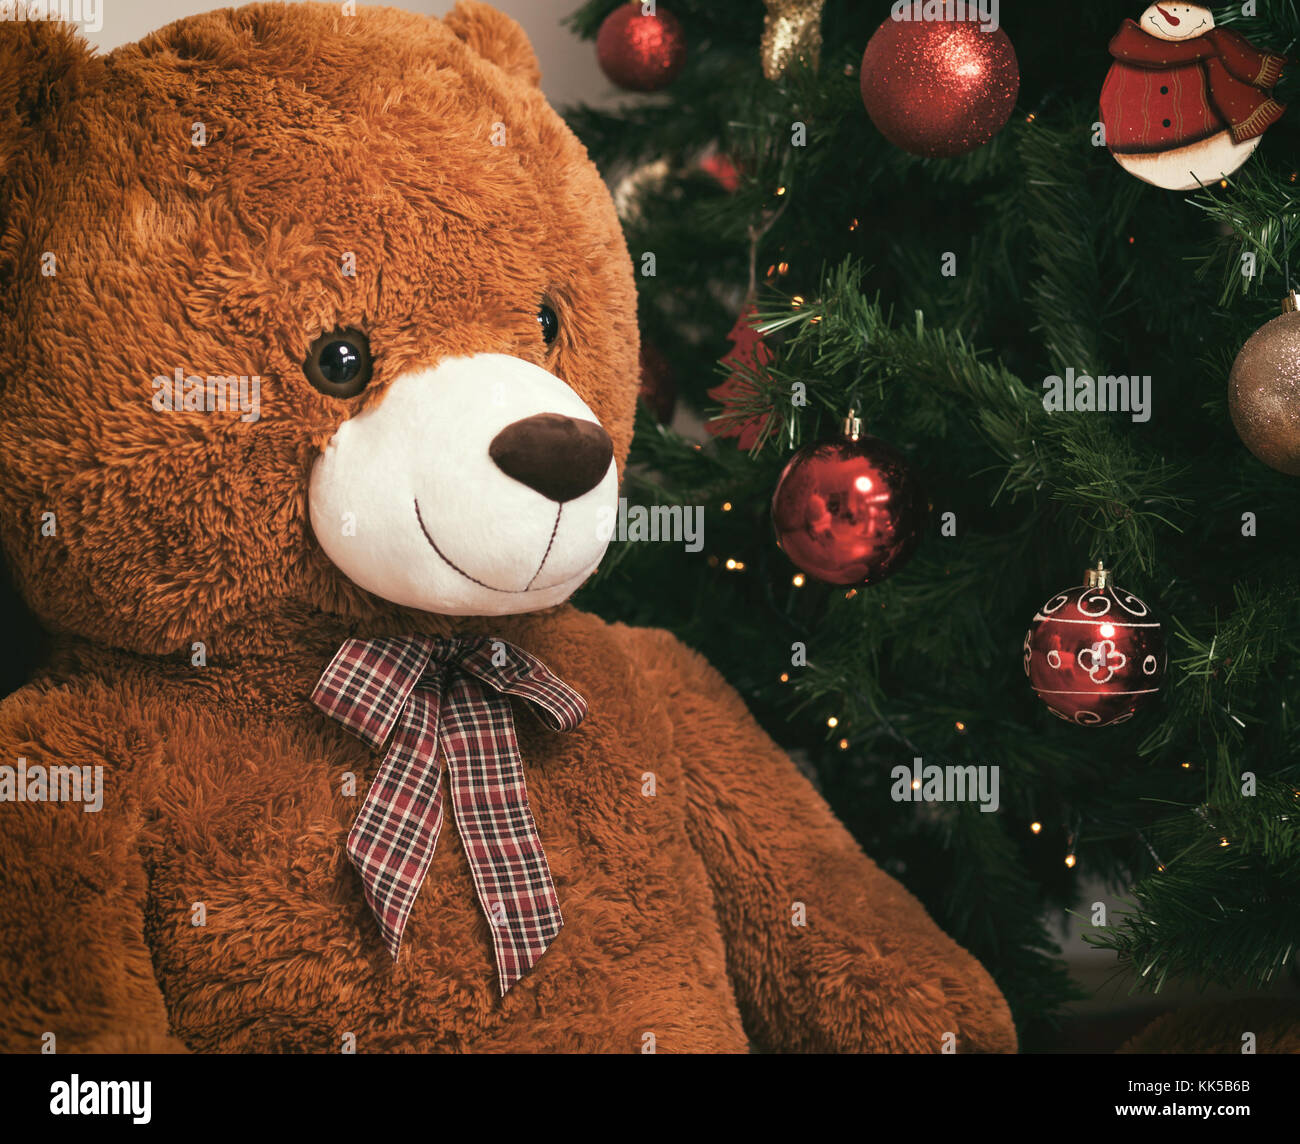 Teddy bear near christmas tree with gifts. Stock Photo